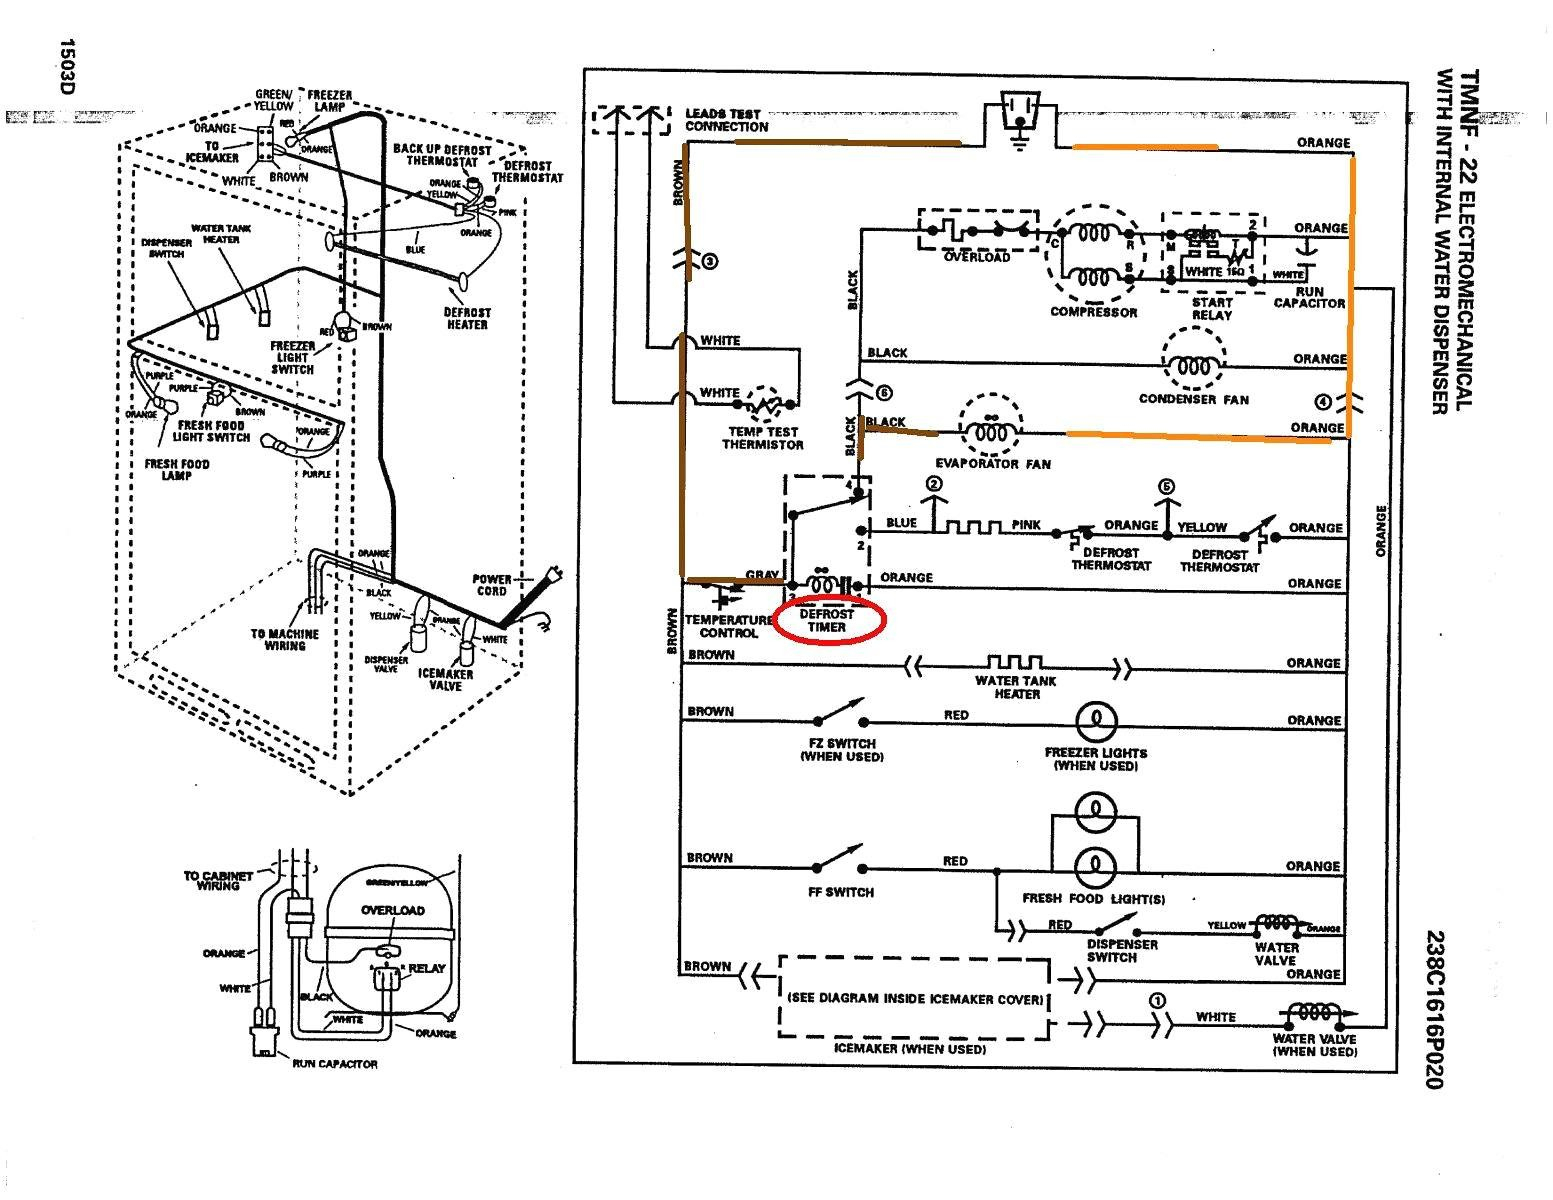 Panasonic Refrigerator Wiring Diagram | Wiring Diagram - Refrigerator Wiring Diagram